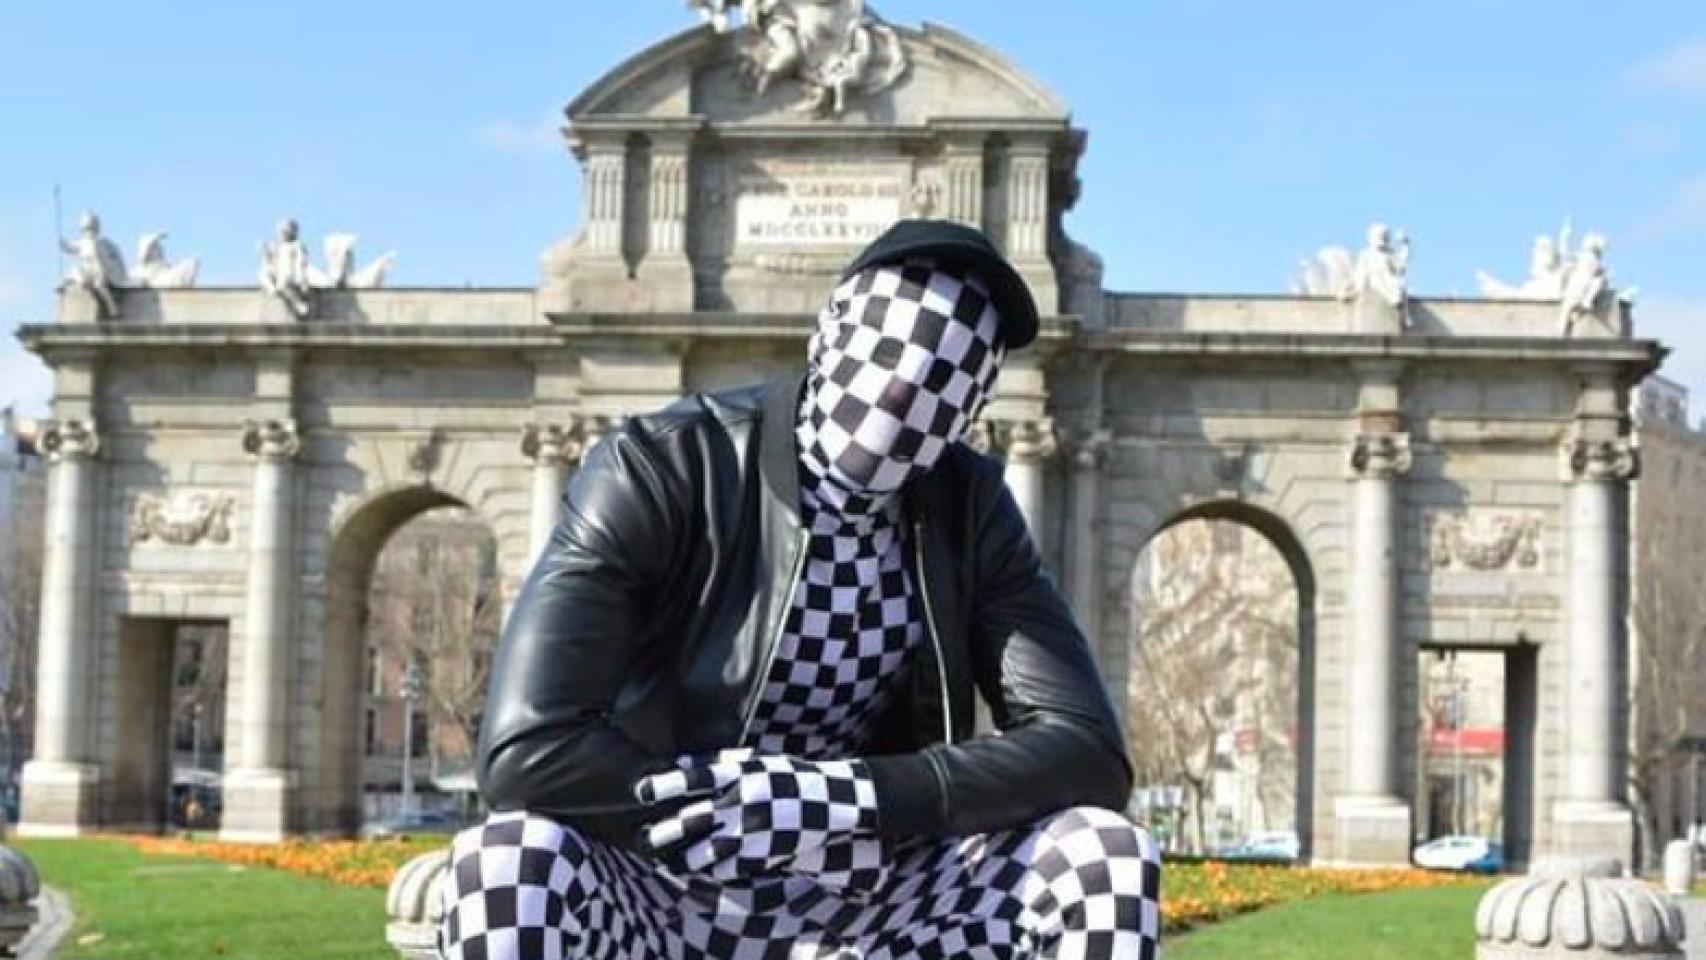 Posted @withrepost • @rey.enigma DESTRUYE ASÍ la famosa defensa Caro-Kann♟️  #ajedrez #reyenigma